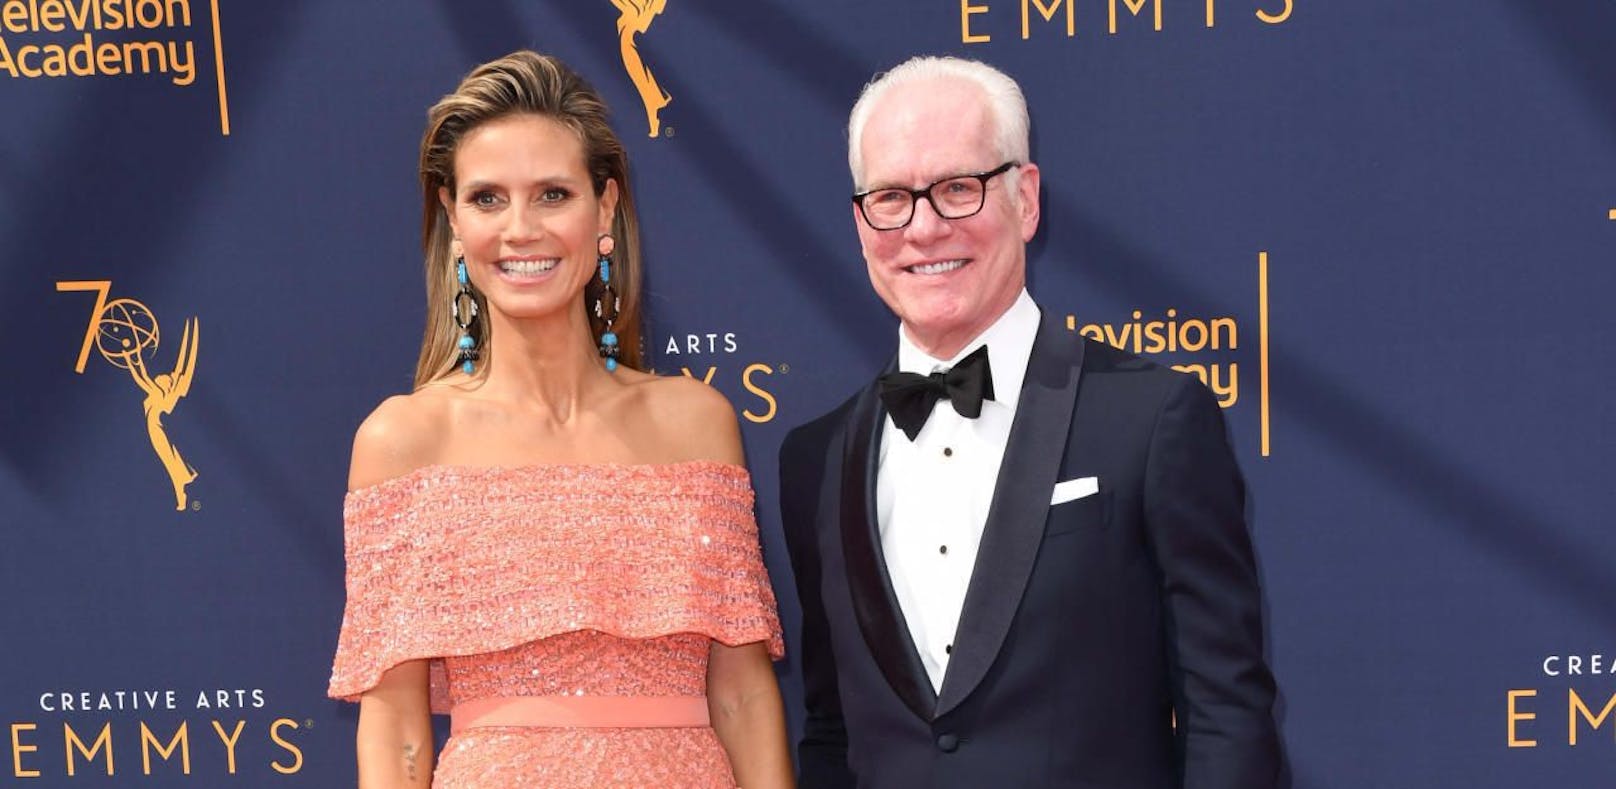 Heidi Klum und Tim Gunn bei den Creative Arts Emmy Awards am 9. September 2018